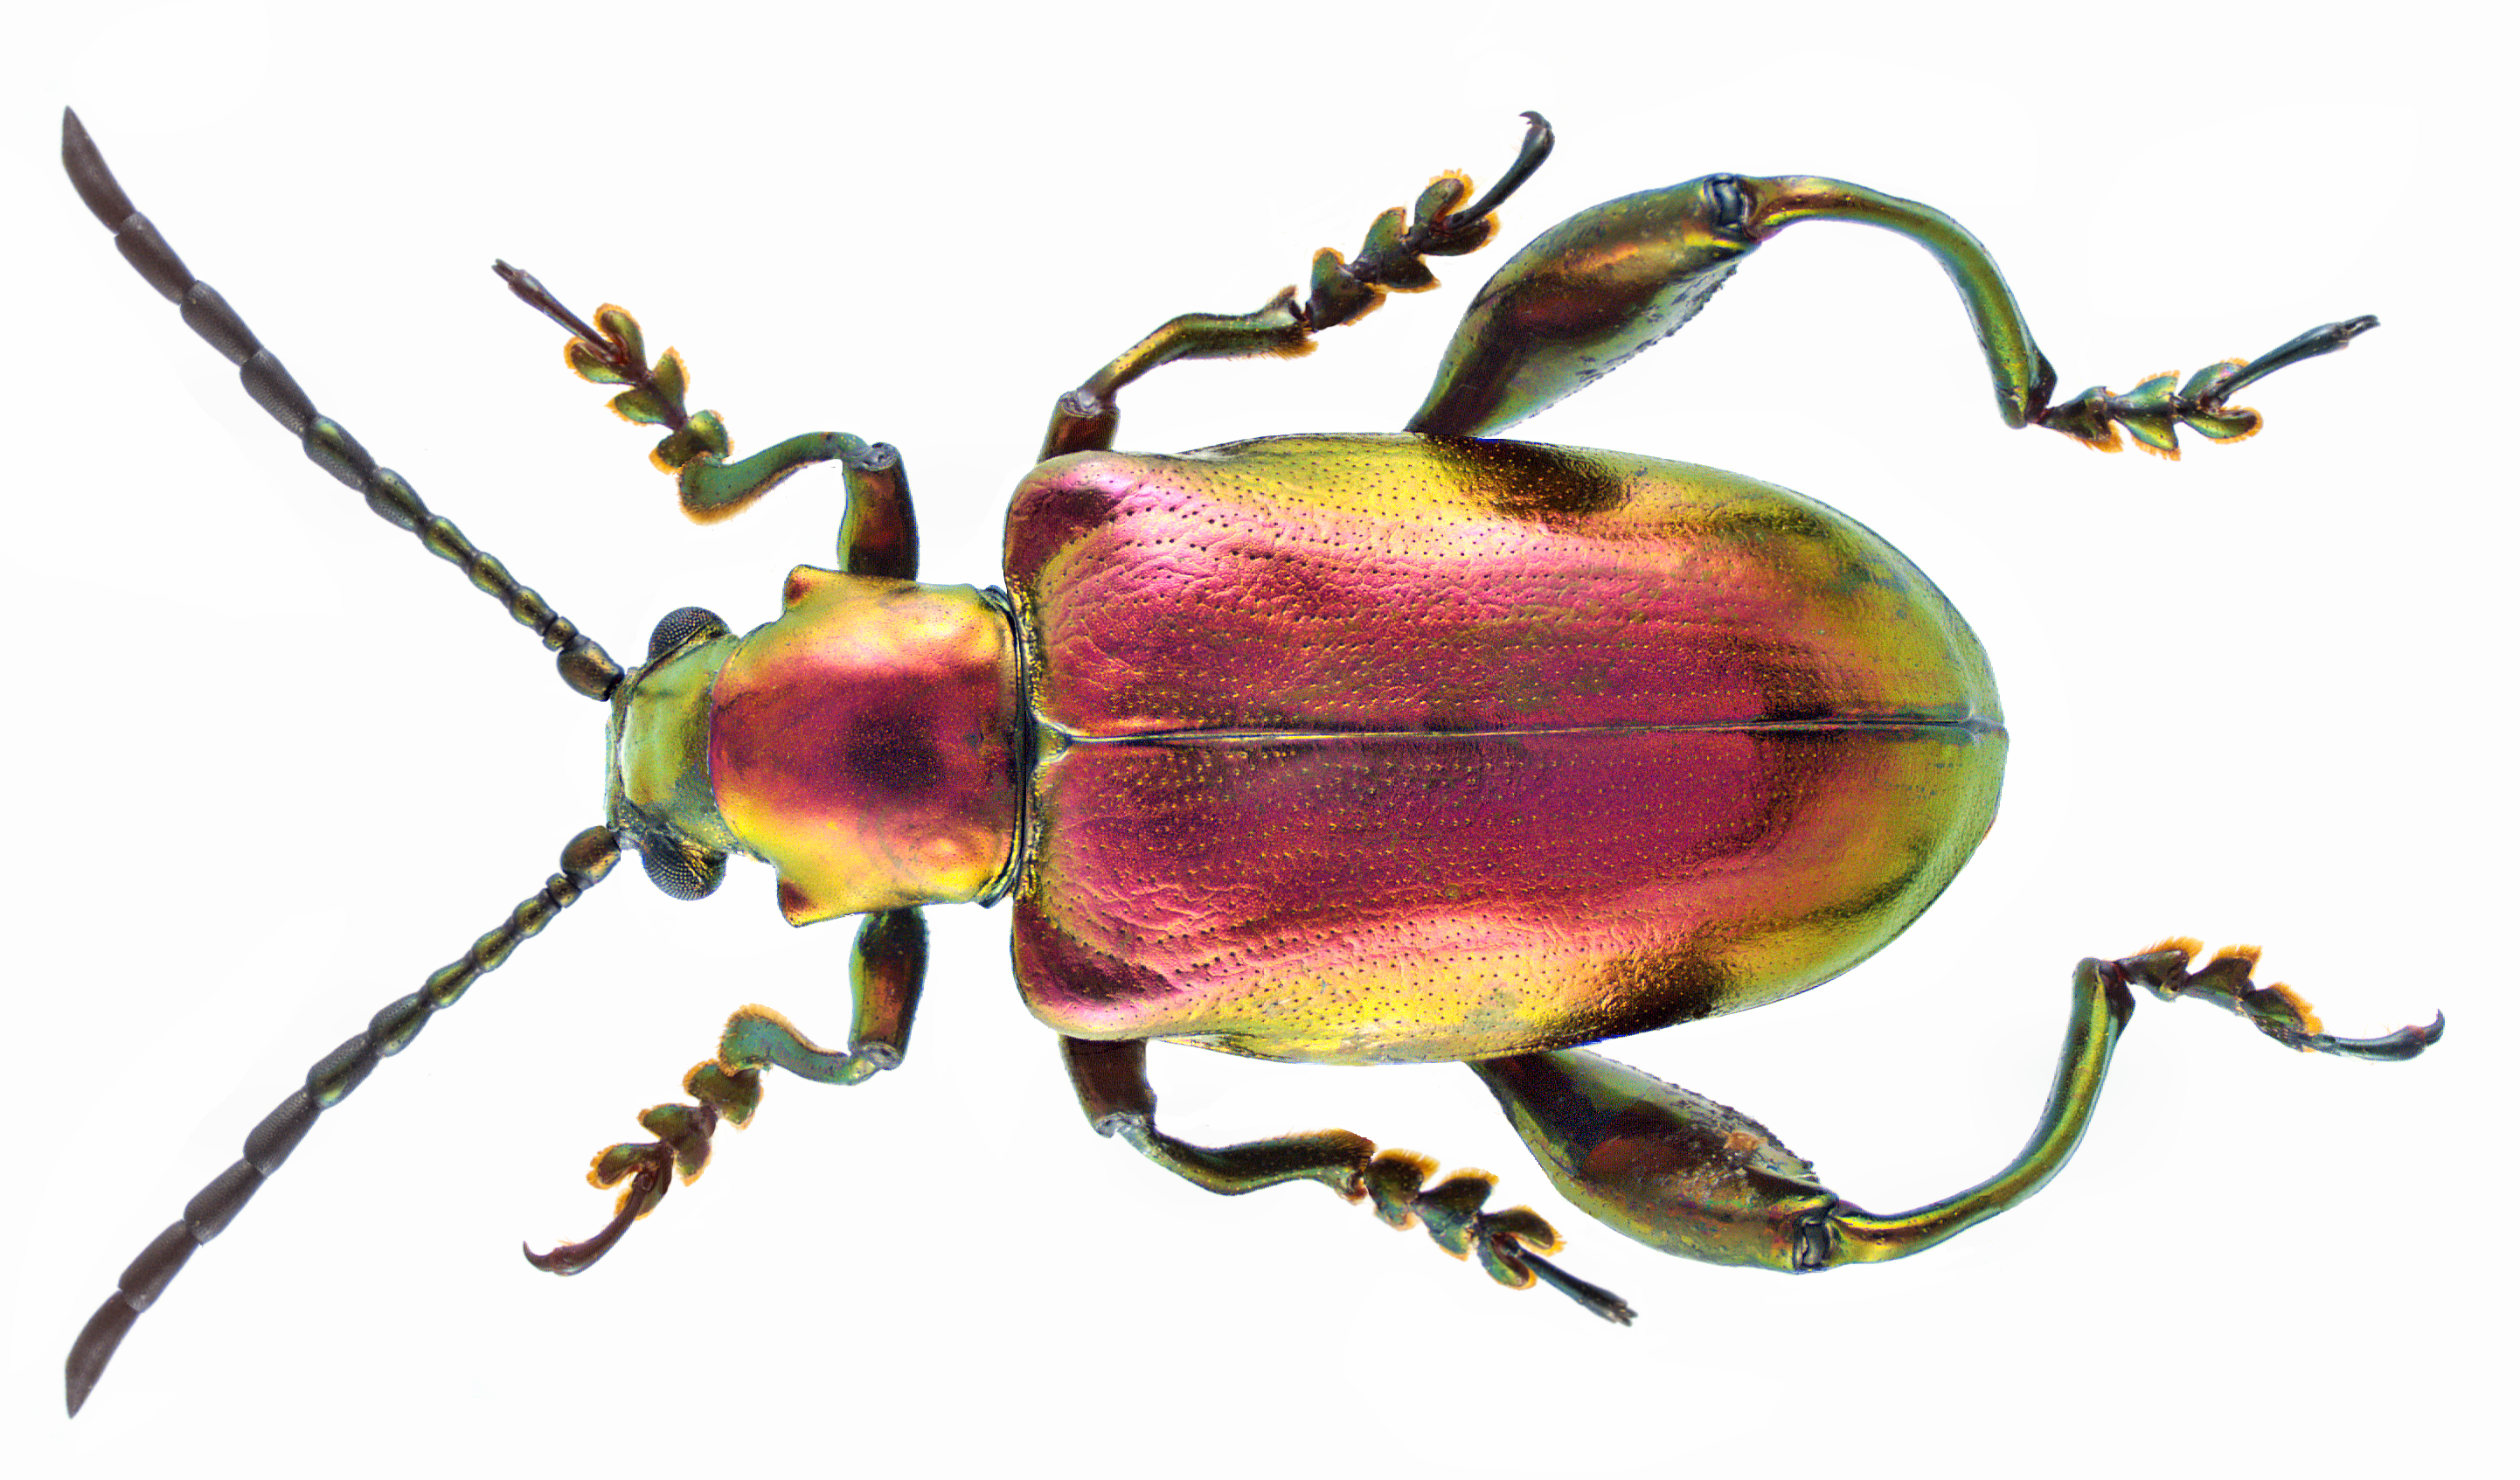 Sagra femorata beetle photo